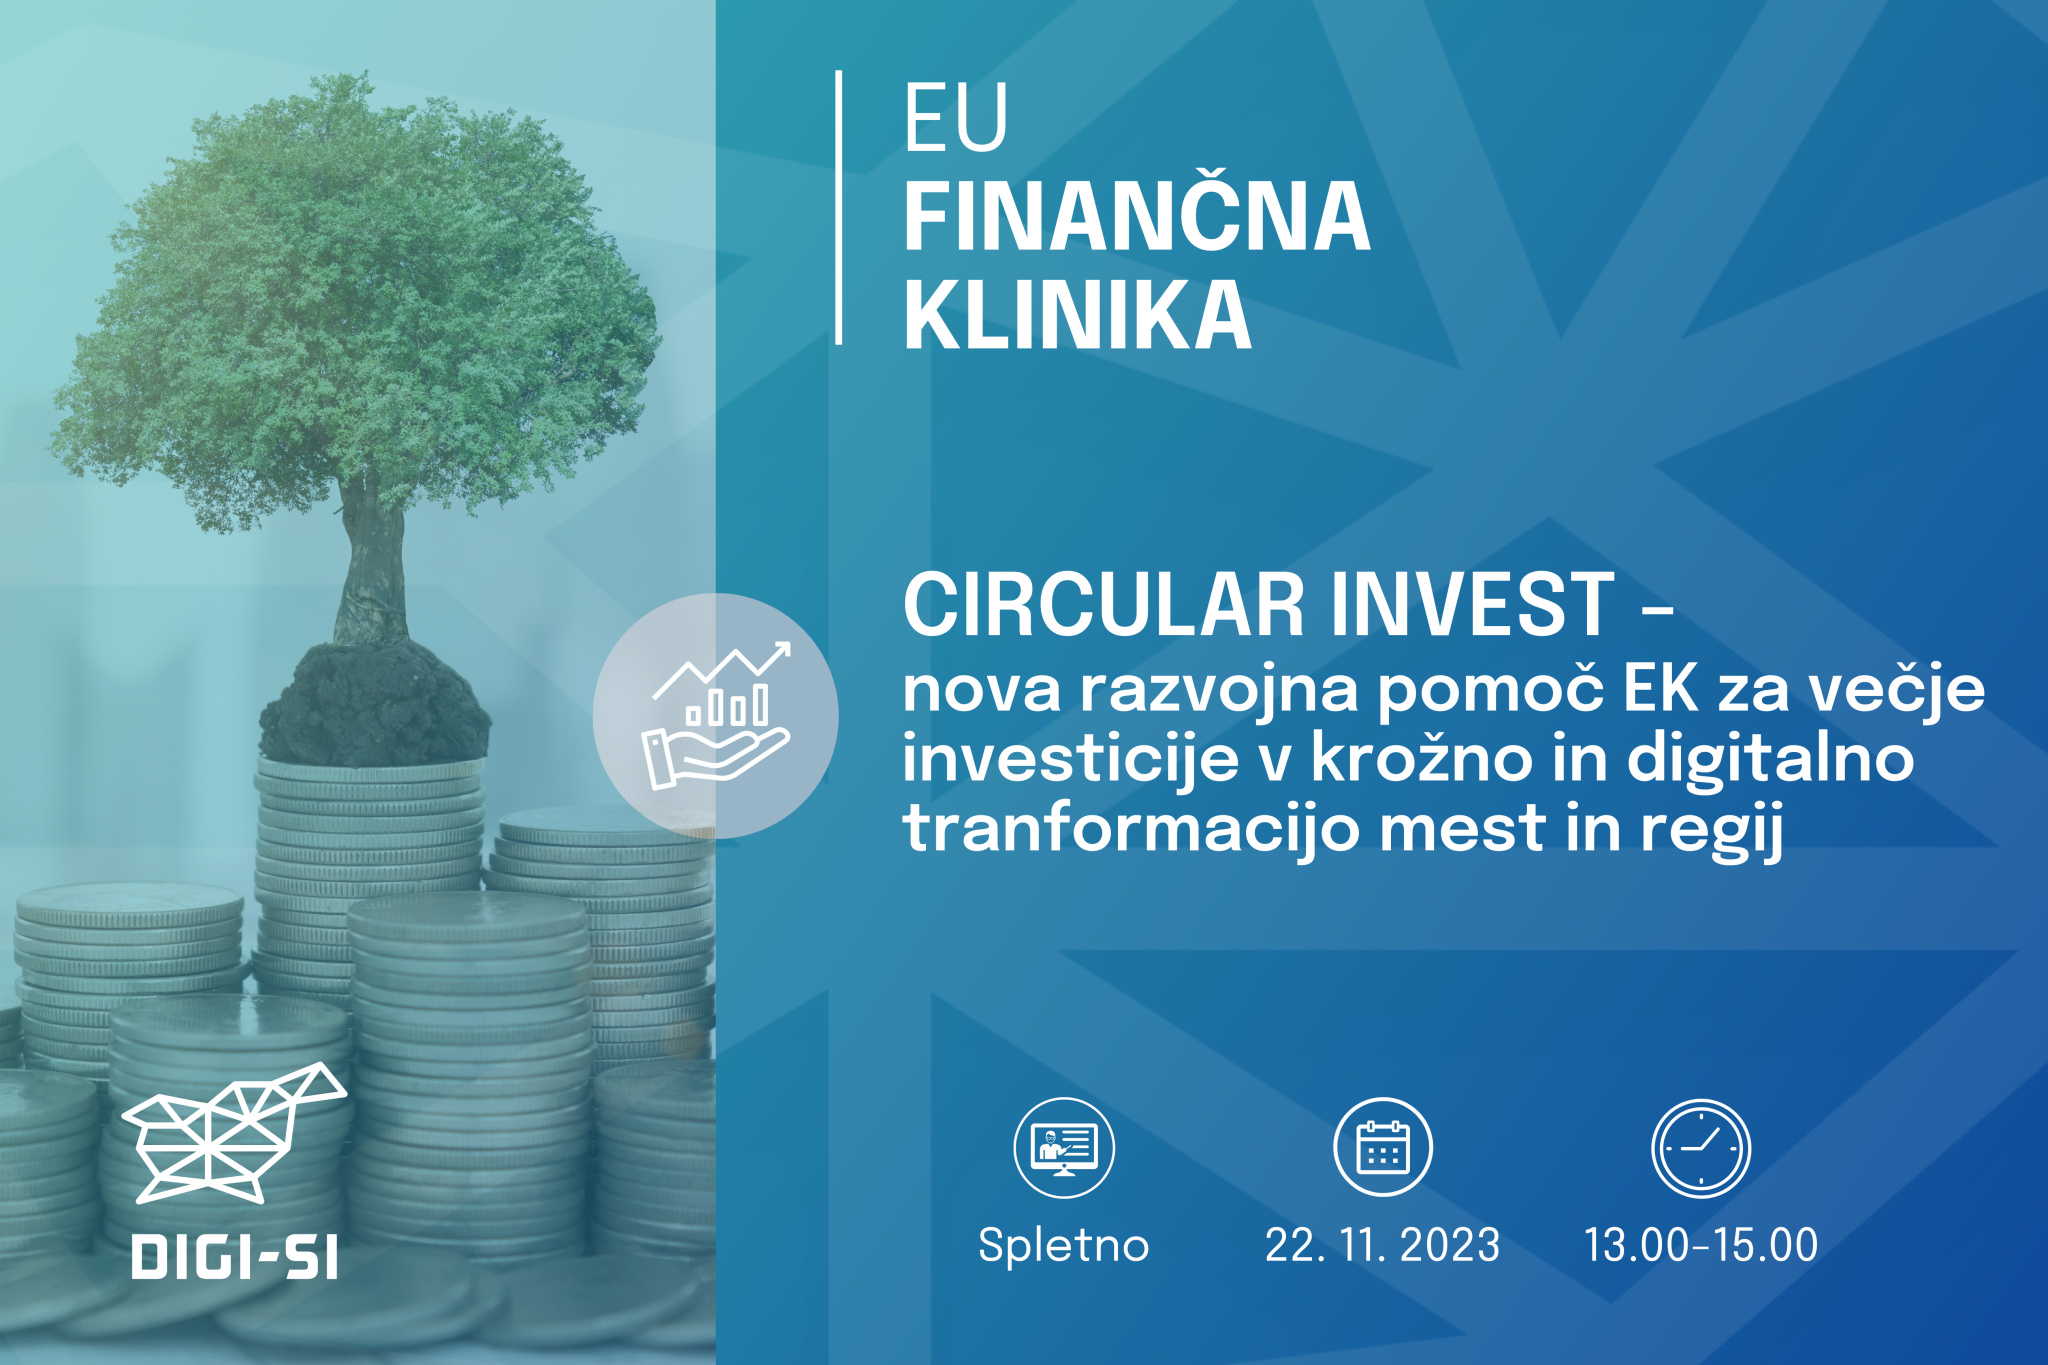 EU funding klinika circular invest